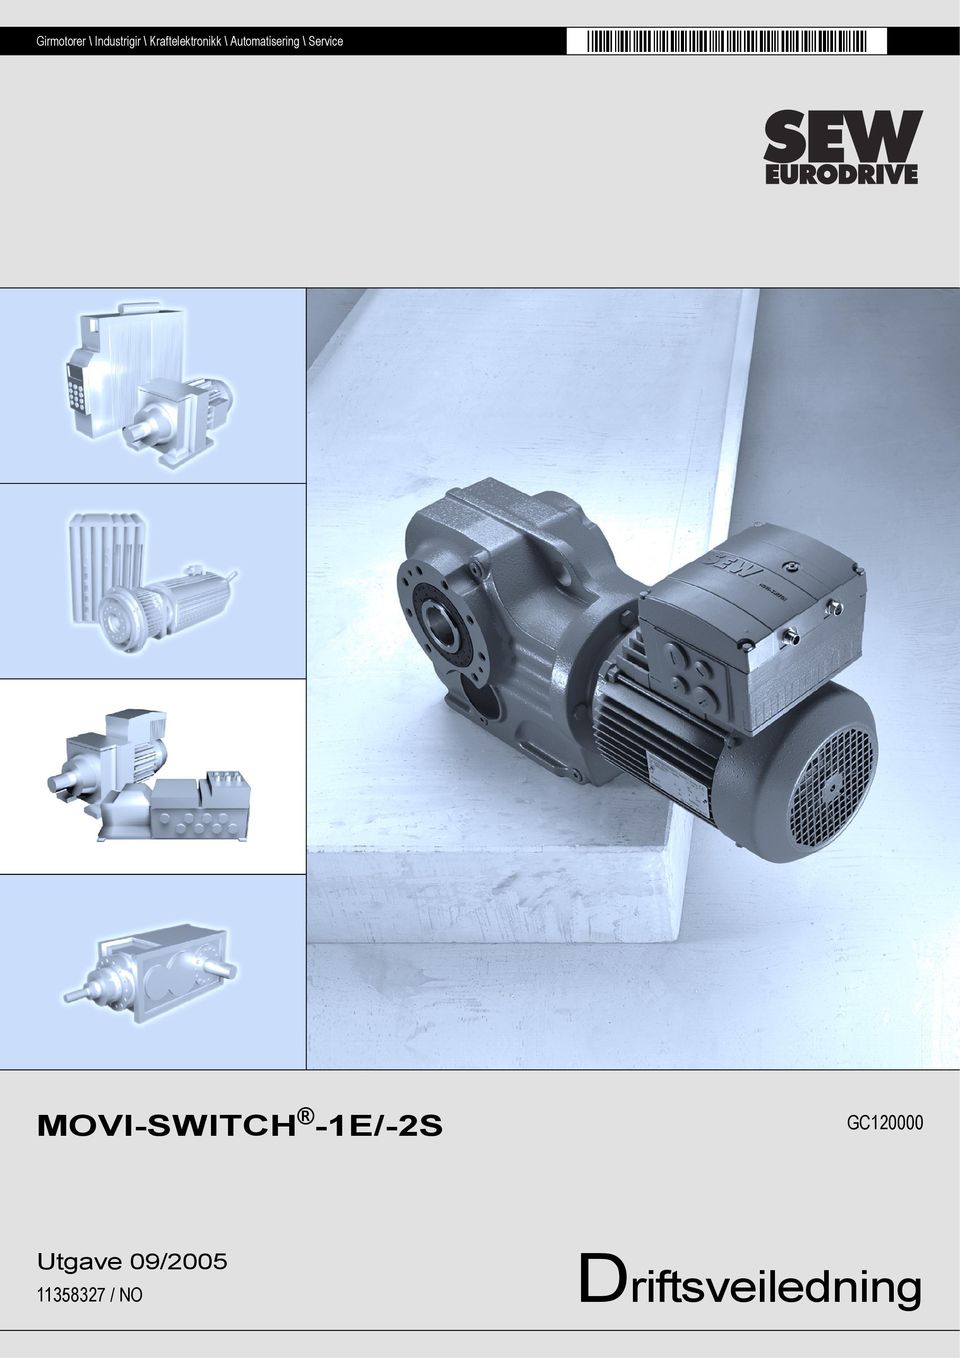 \ MOVI-SWITCH -1E/-2S GC120000